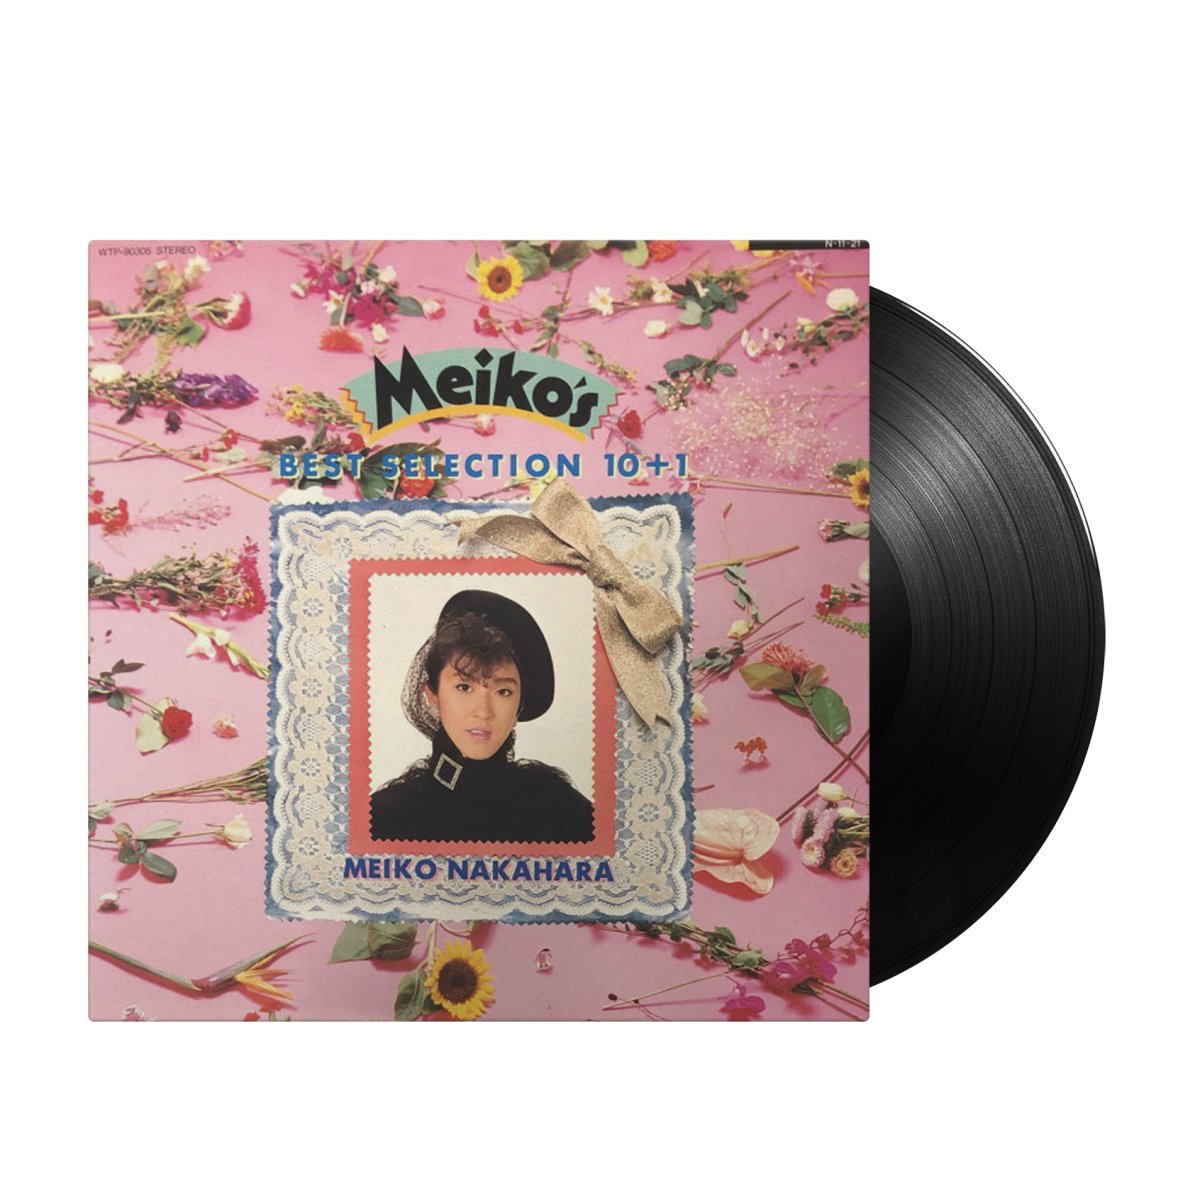 Meiko Nakahara - Meiko's Best Selection 10+1 (Japan Import) - Inner Ocean Records